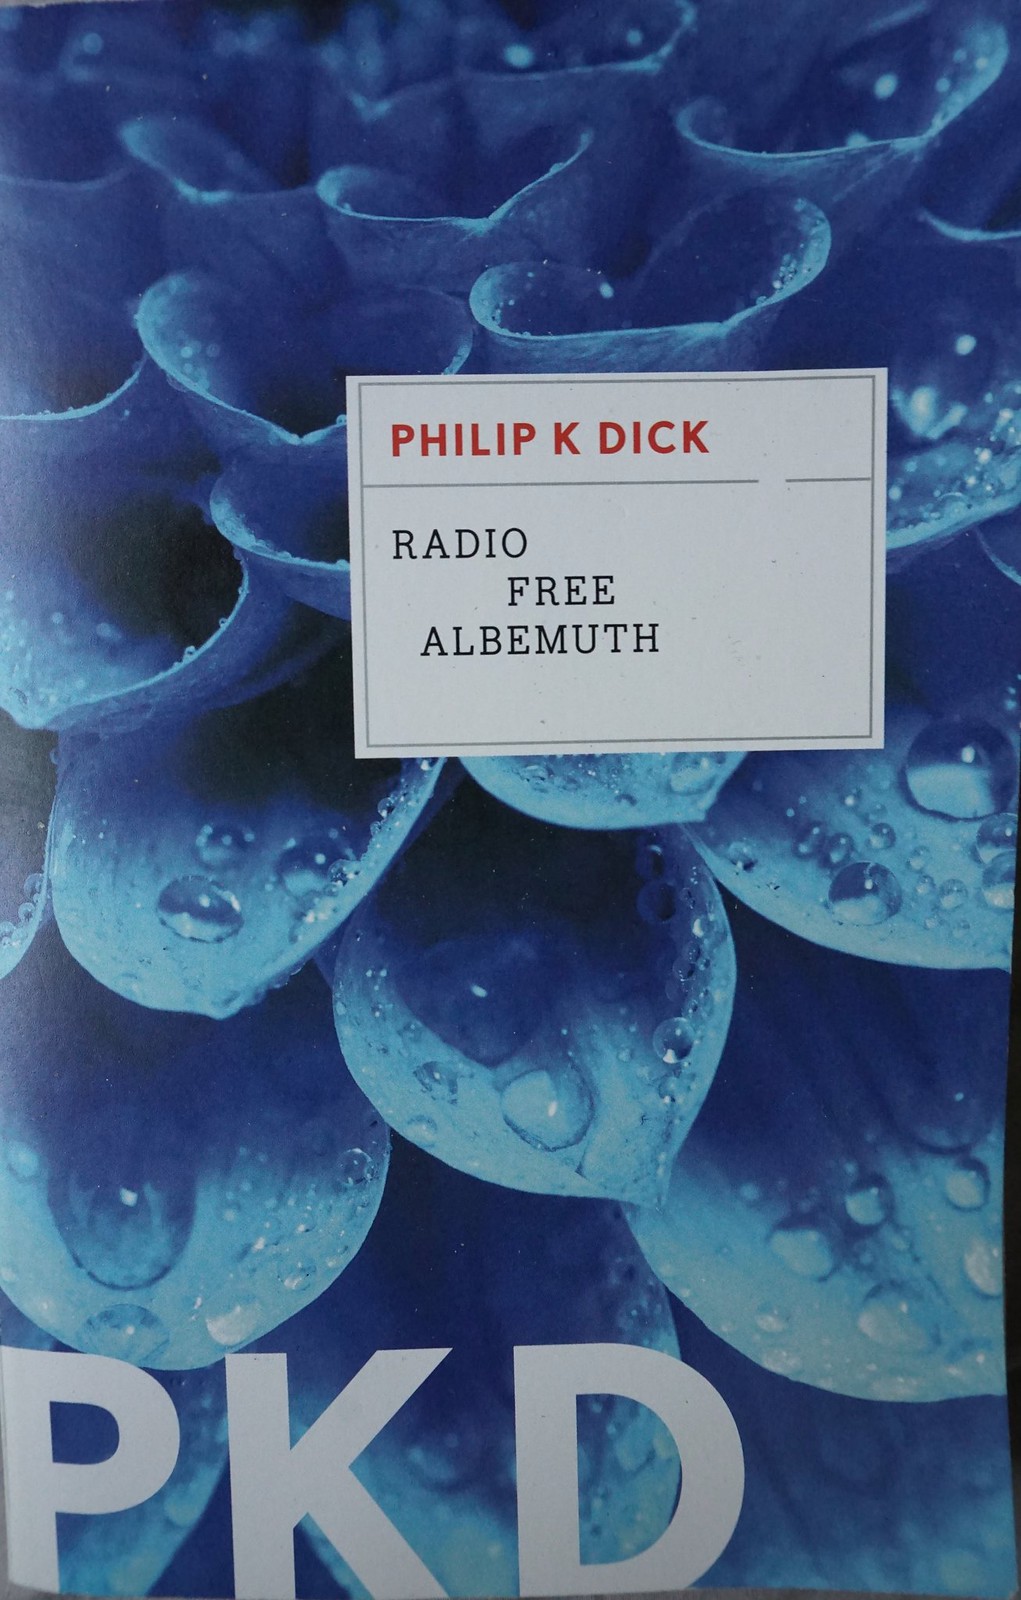 PHILIP K DICK'S "RADIO FREE ALBEMUTH"